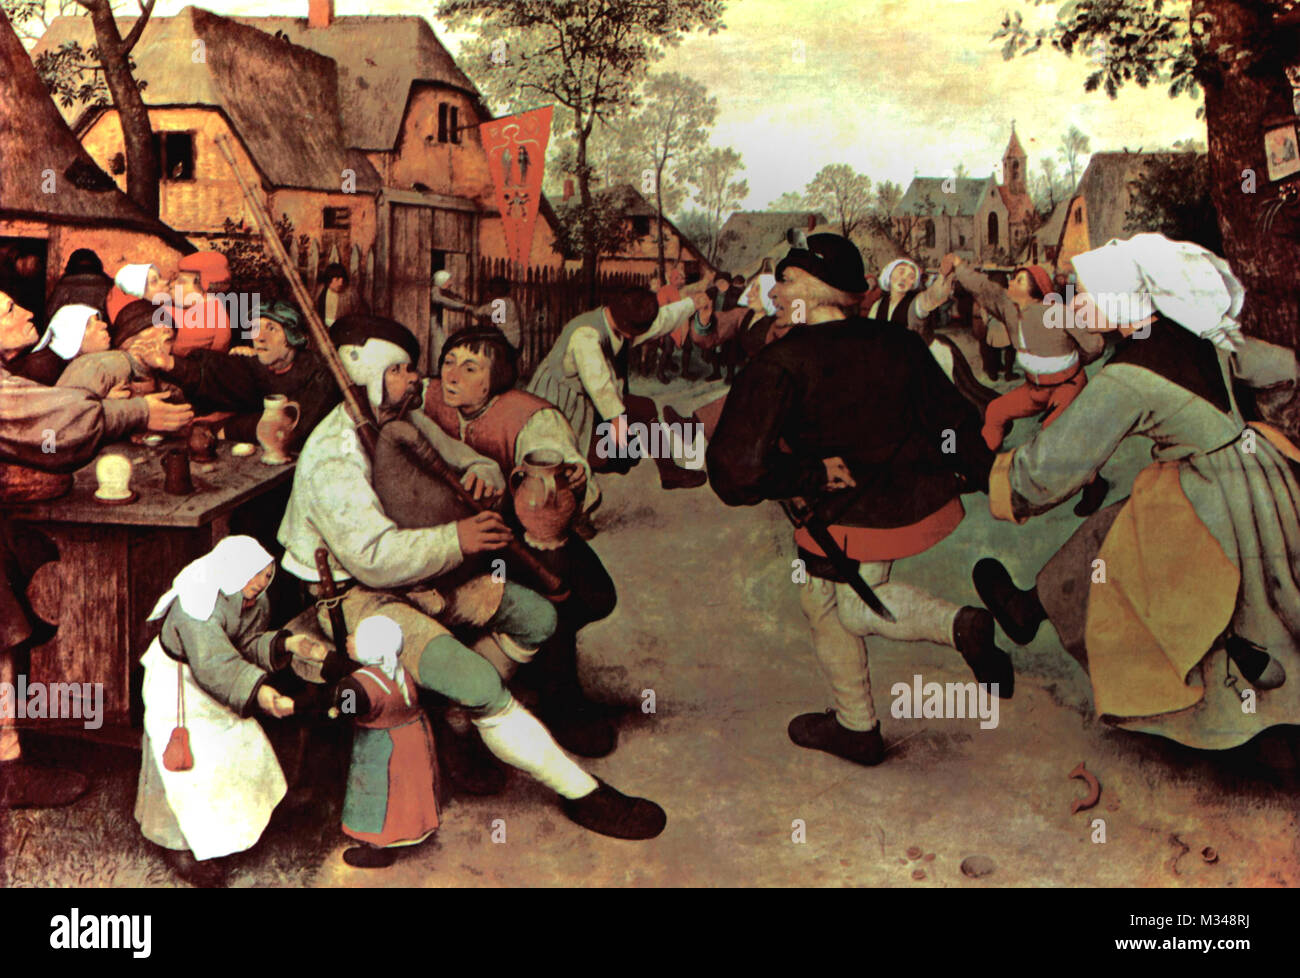 Pieter Bruegel the Elder, The Peasant Dance (1568), Stock Photo